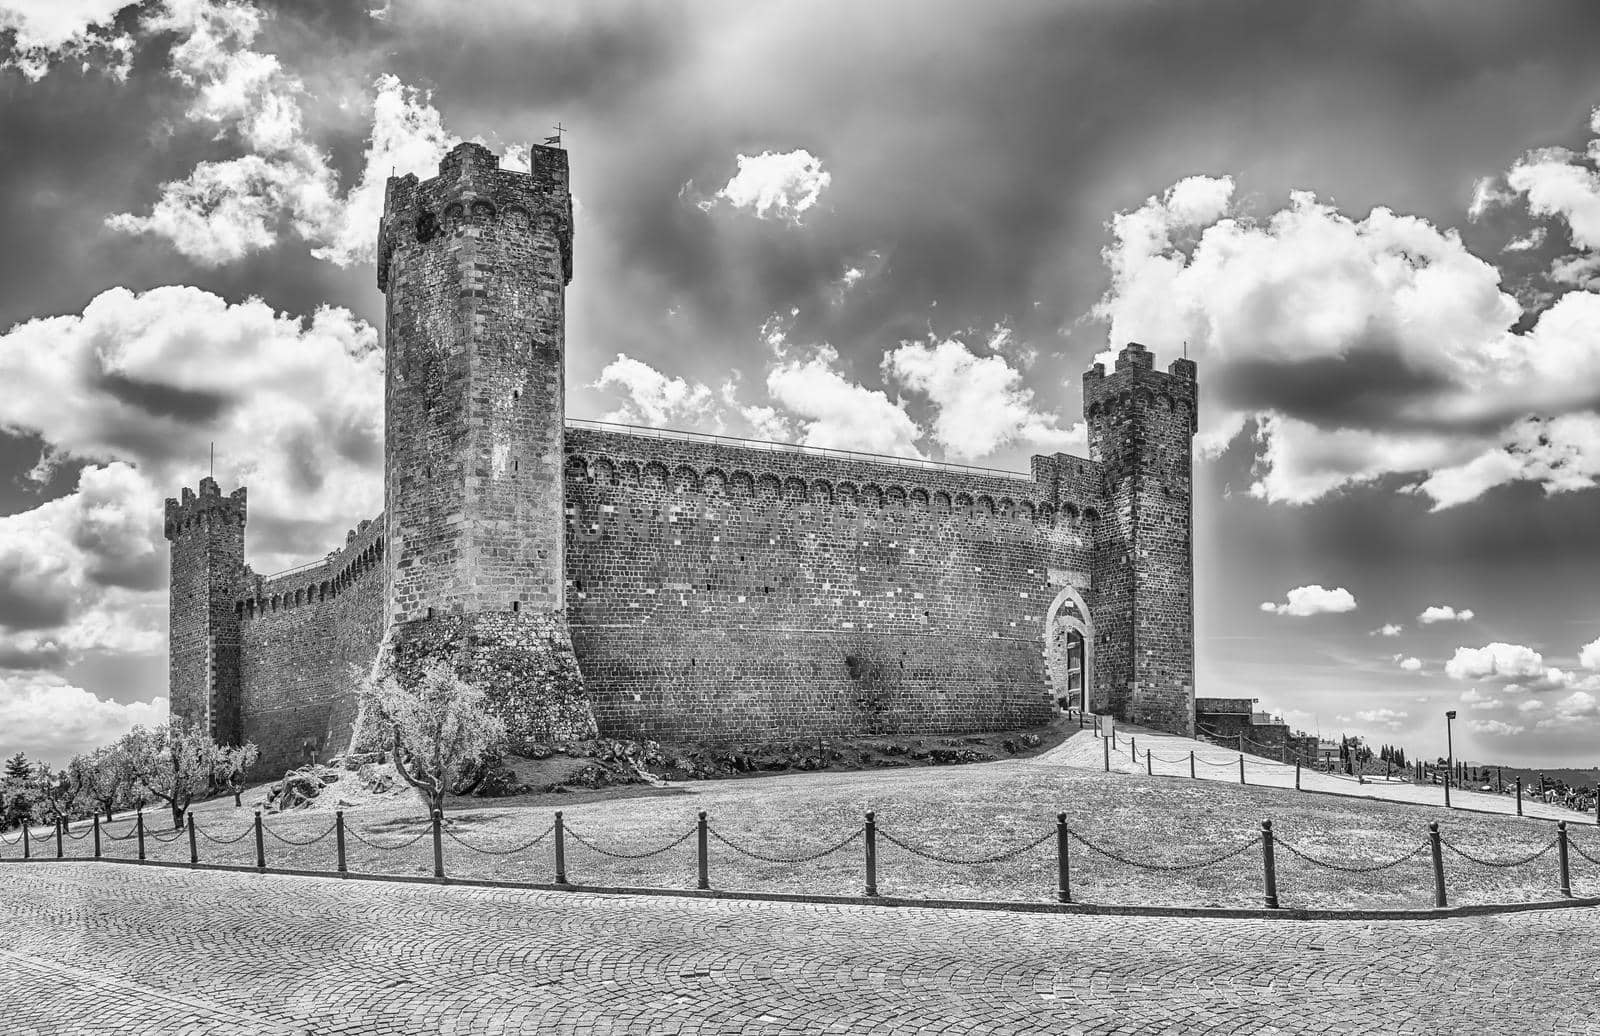 Medieval italian fortress, iconic landmark in Montalcino, Tuscany, Italy by marcorubino